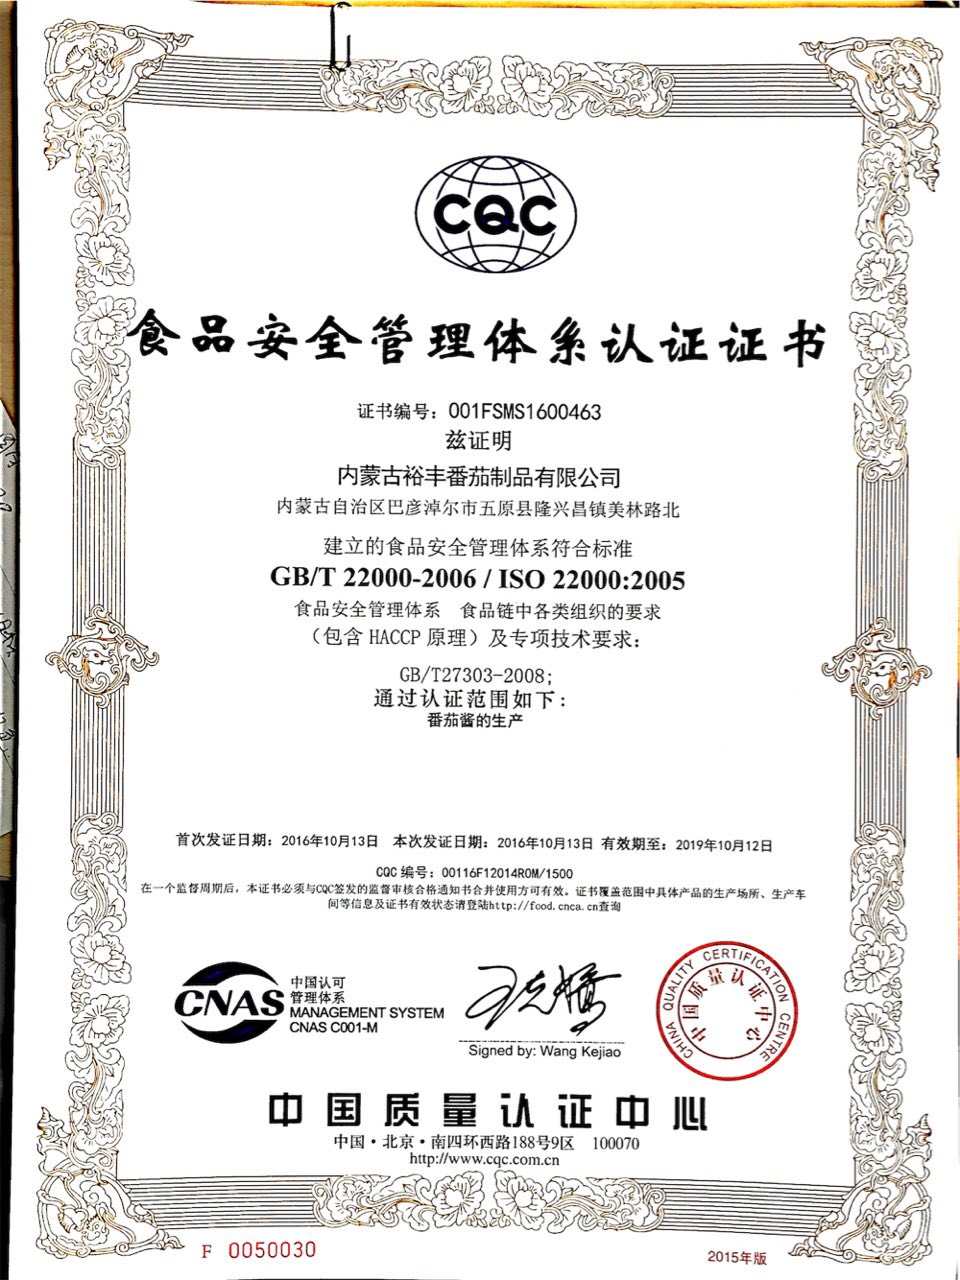 Yufeng ISO22000 Certificate